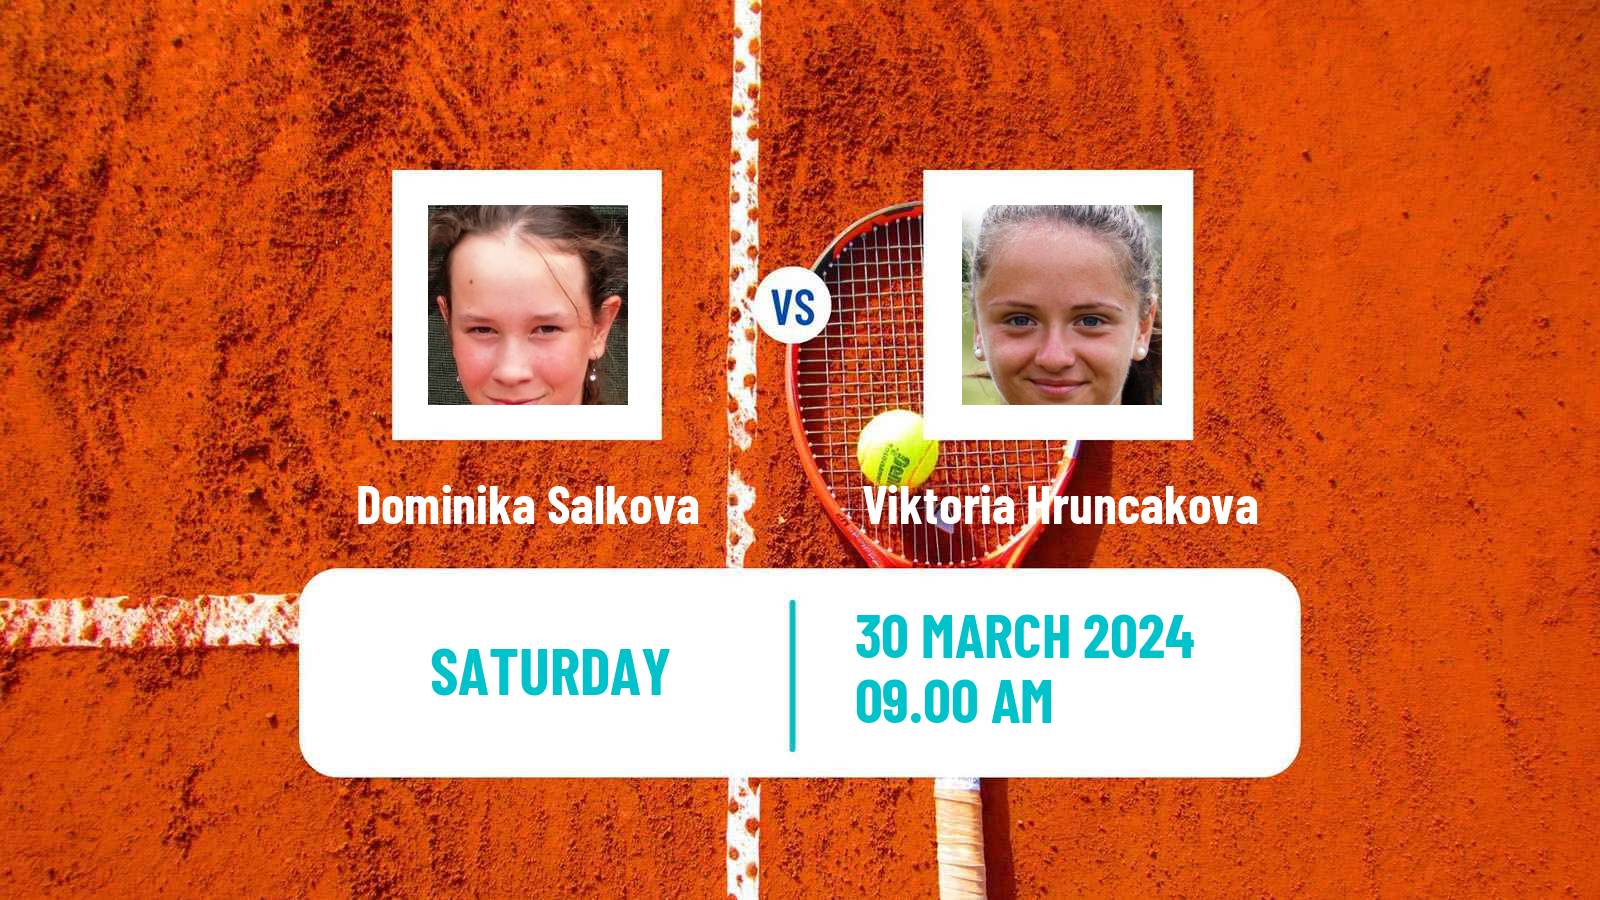 Tennis ITF W50 Murska Sobota Women Dominika Salkova - Viktoria Hruncakova